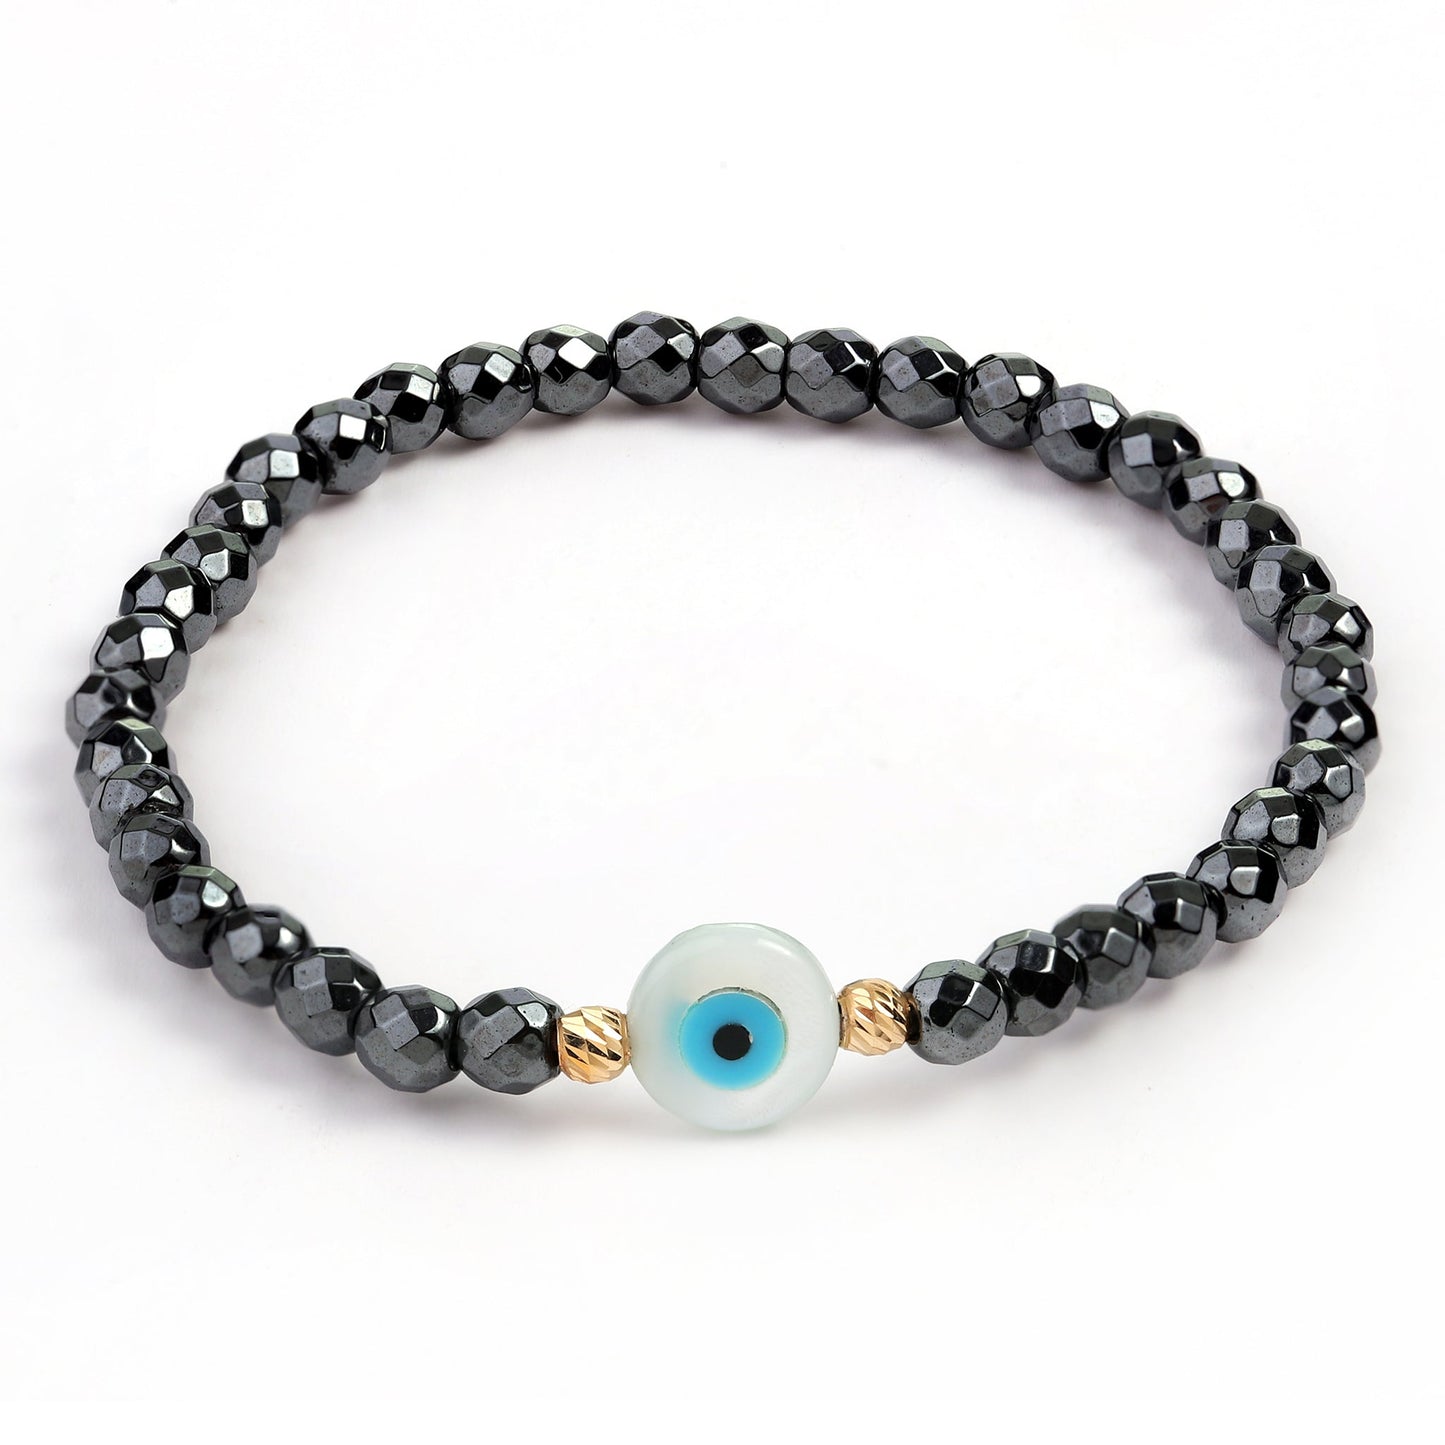 The eye of protection beaded bracelet - Oria.jewelry